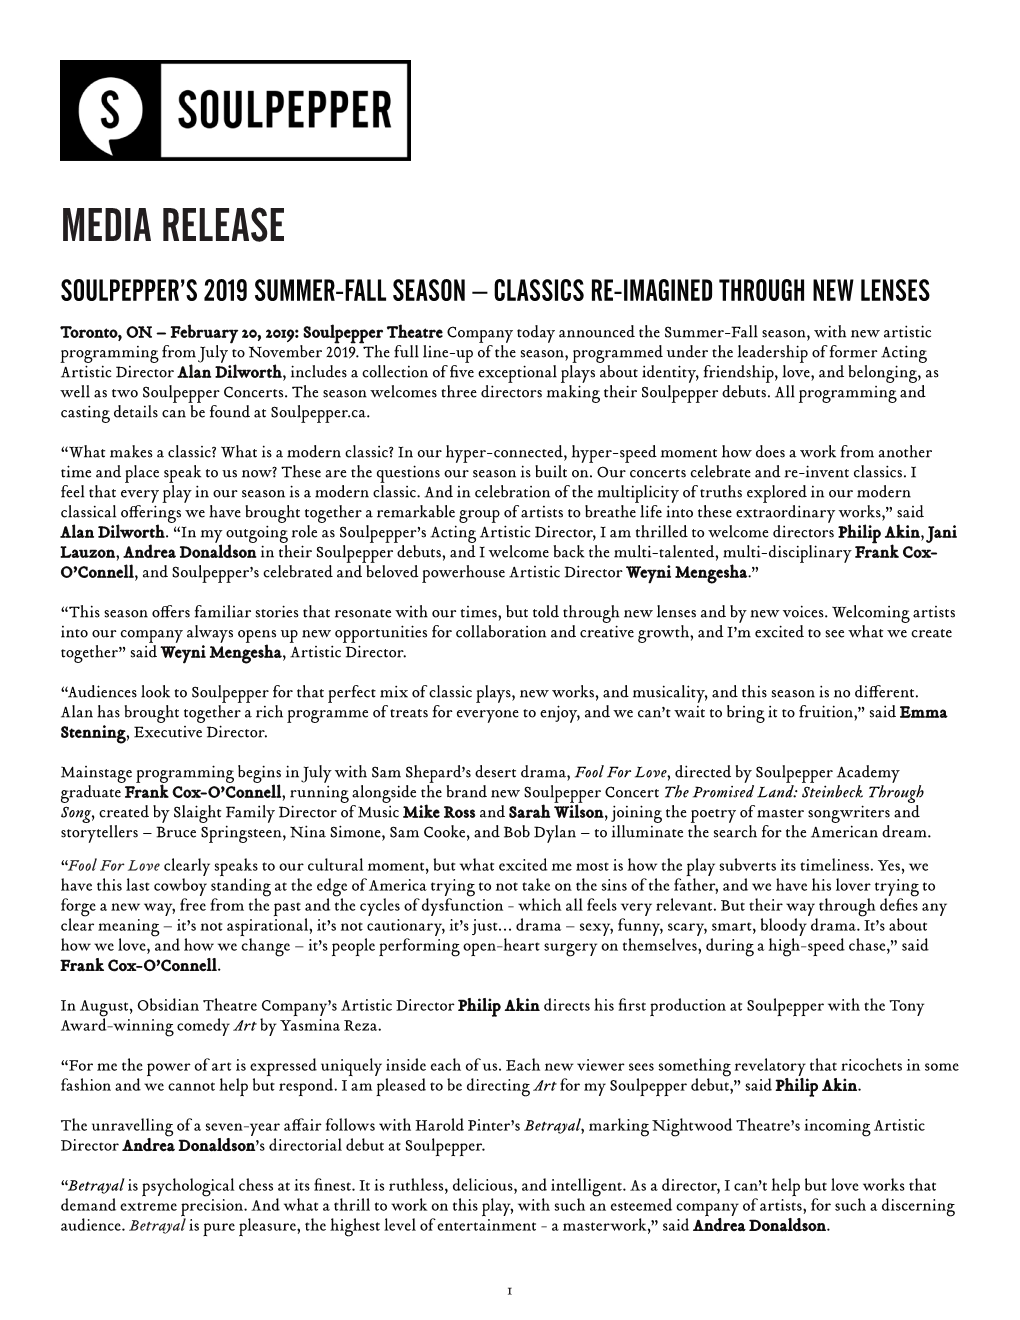 Media Release Soulpepper’S 2019 Summer-Fall Season – Classics Re-Imagined Through New Lenses